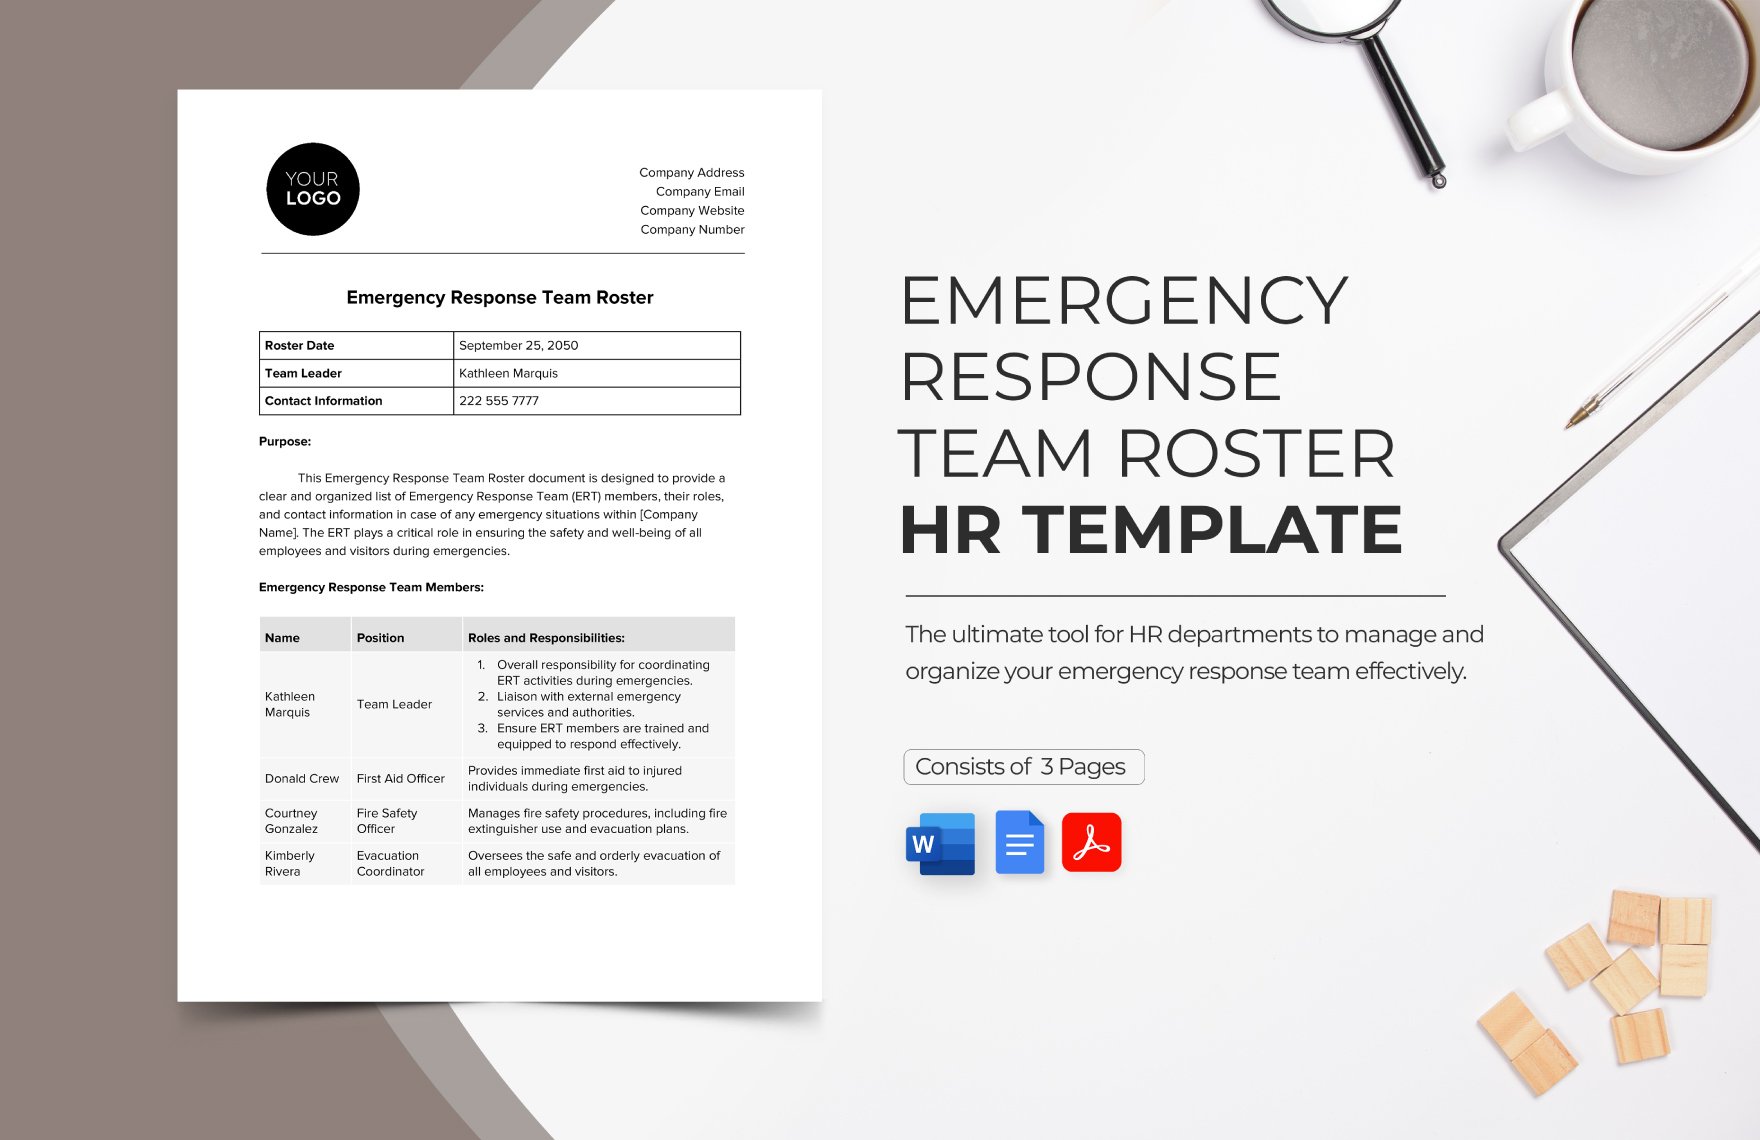 Emergency Response Team Roster HR Template